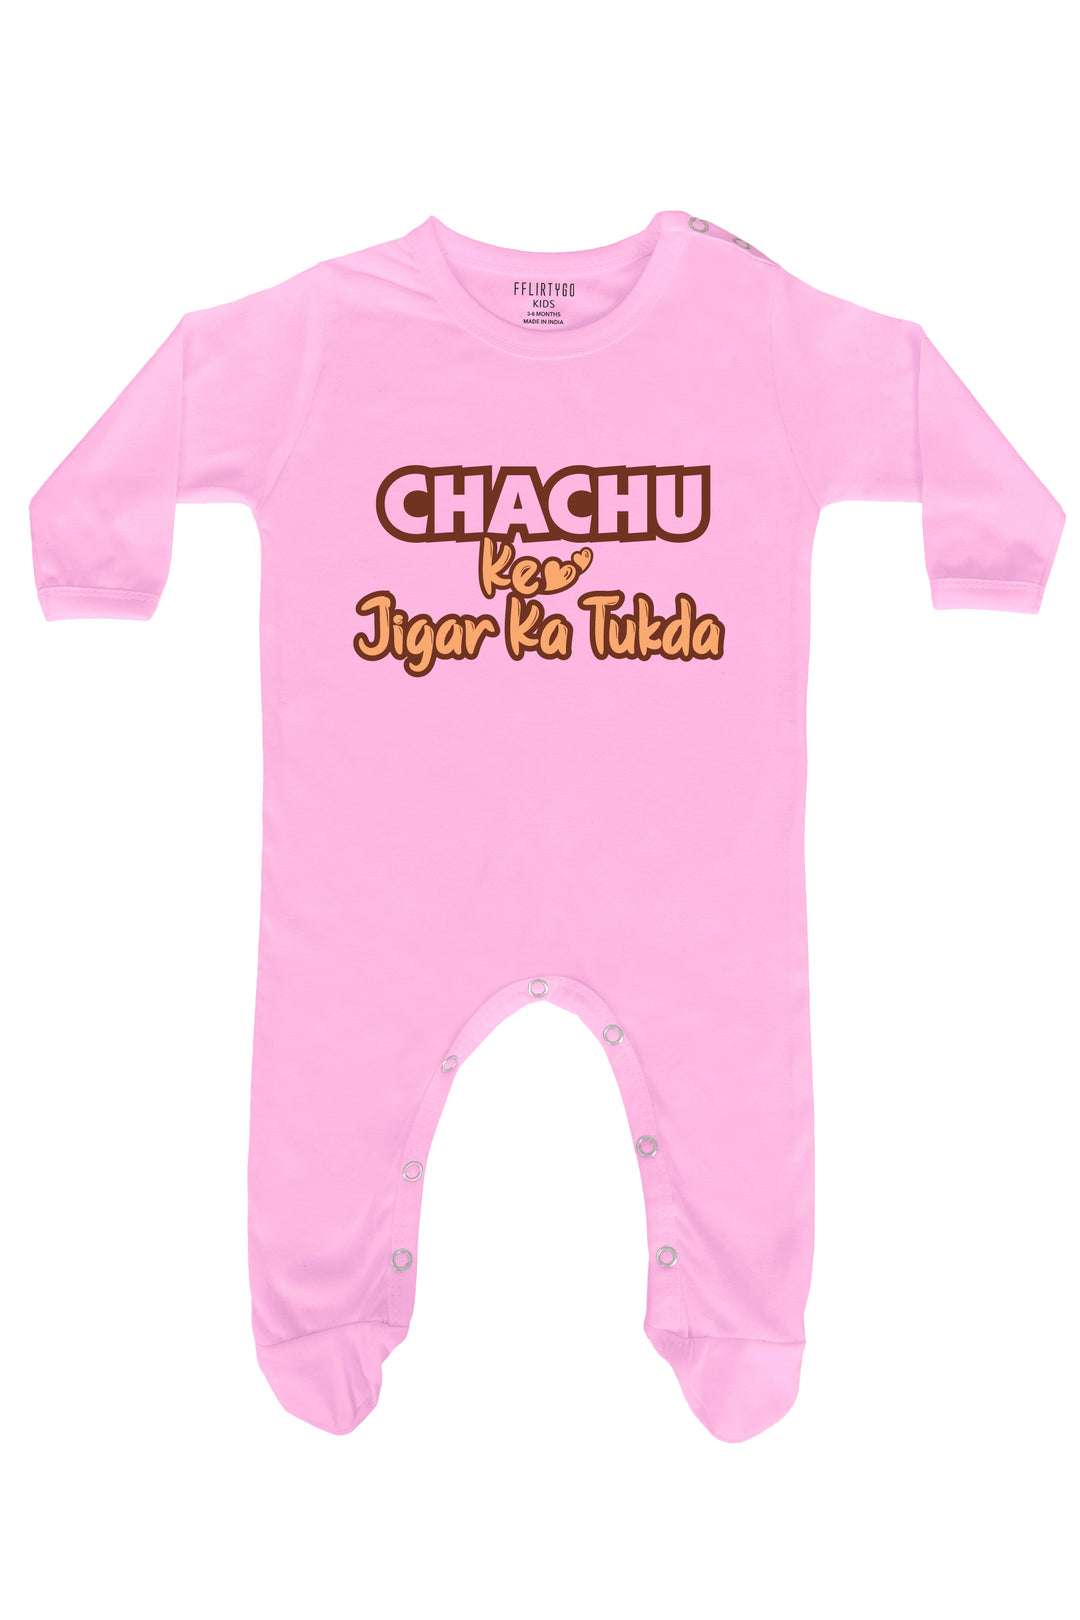 Chachu Ke Jigar Ka Tukda Baby Romper | Onesies